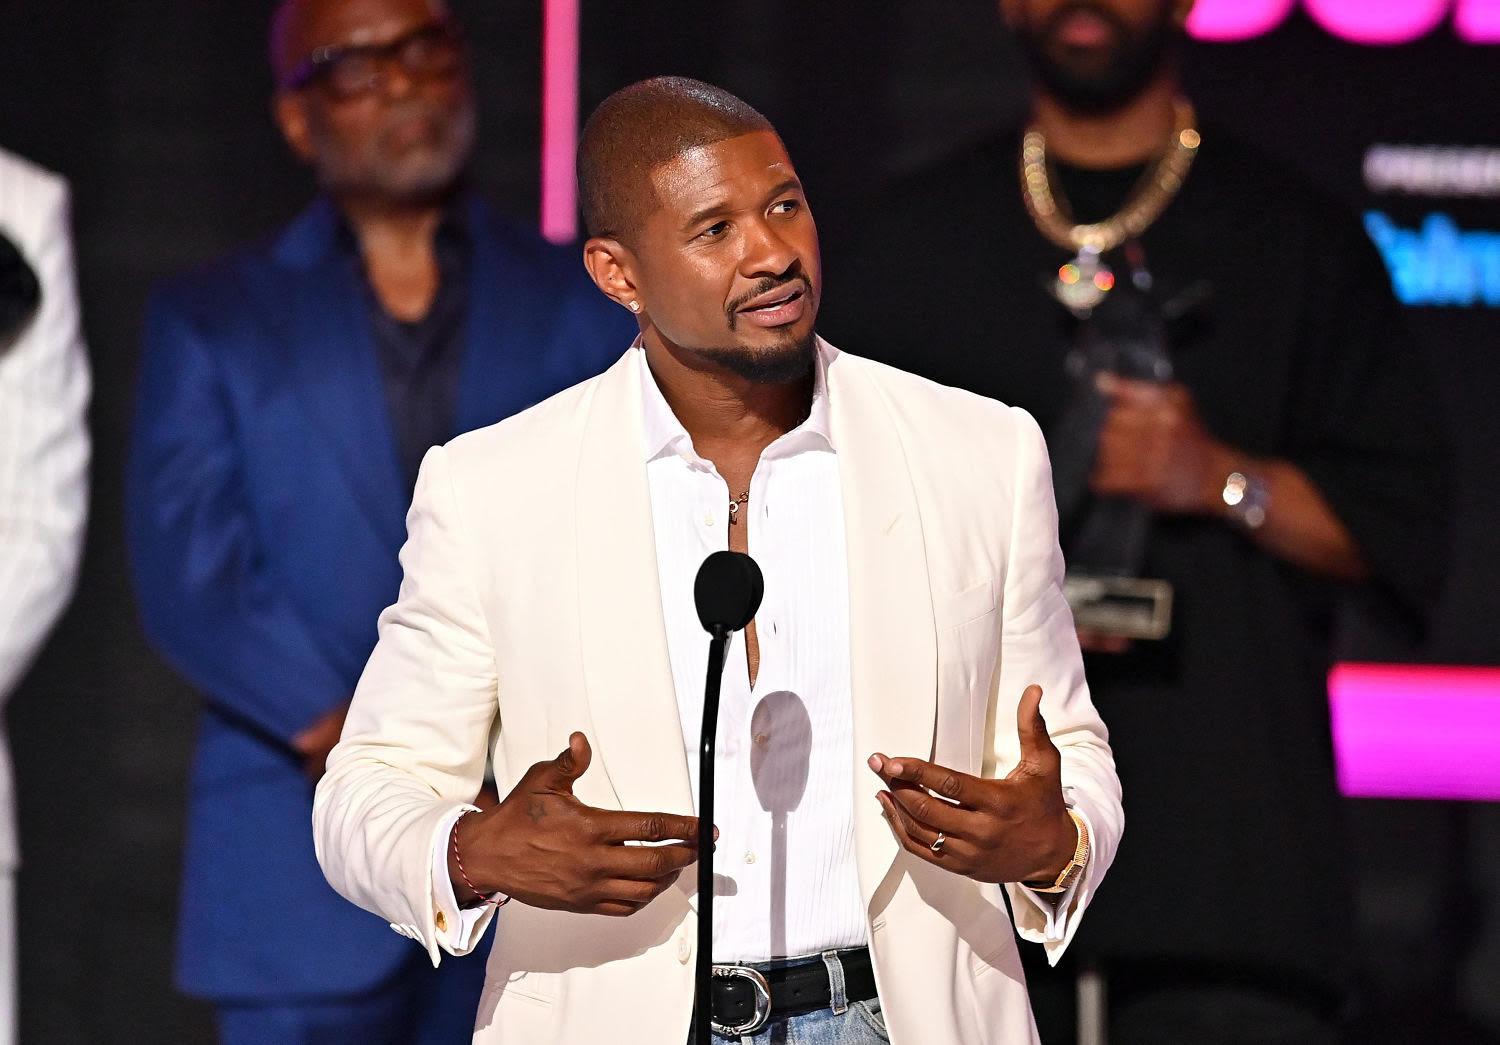 BET posts ‘unfiltered’ Usher speech after censorship during live awards ceremony